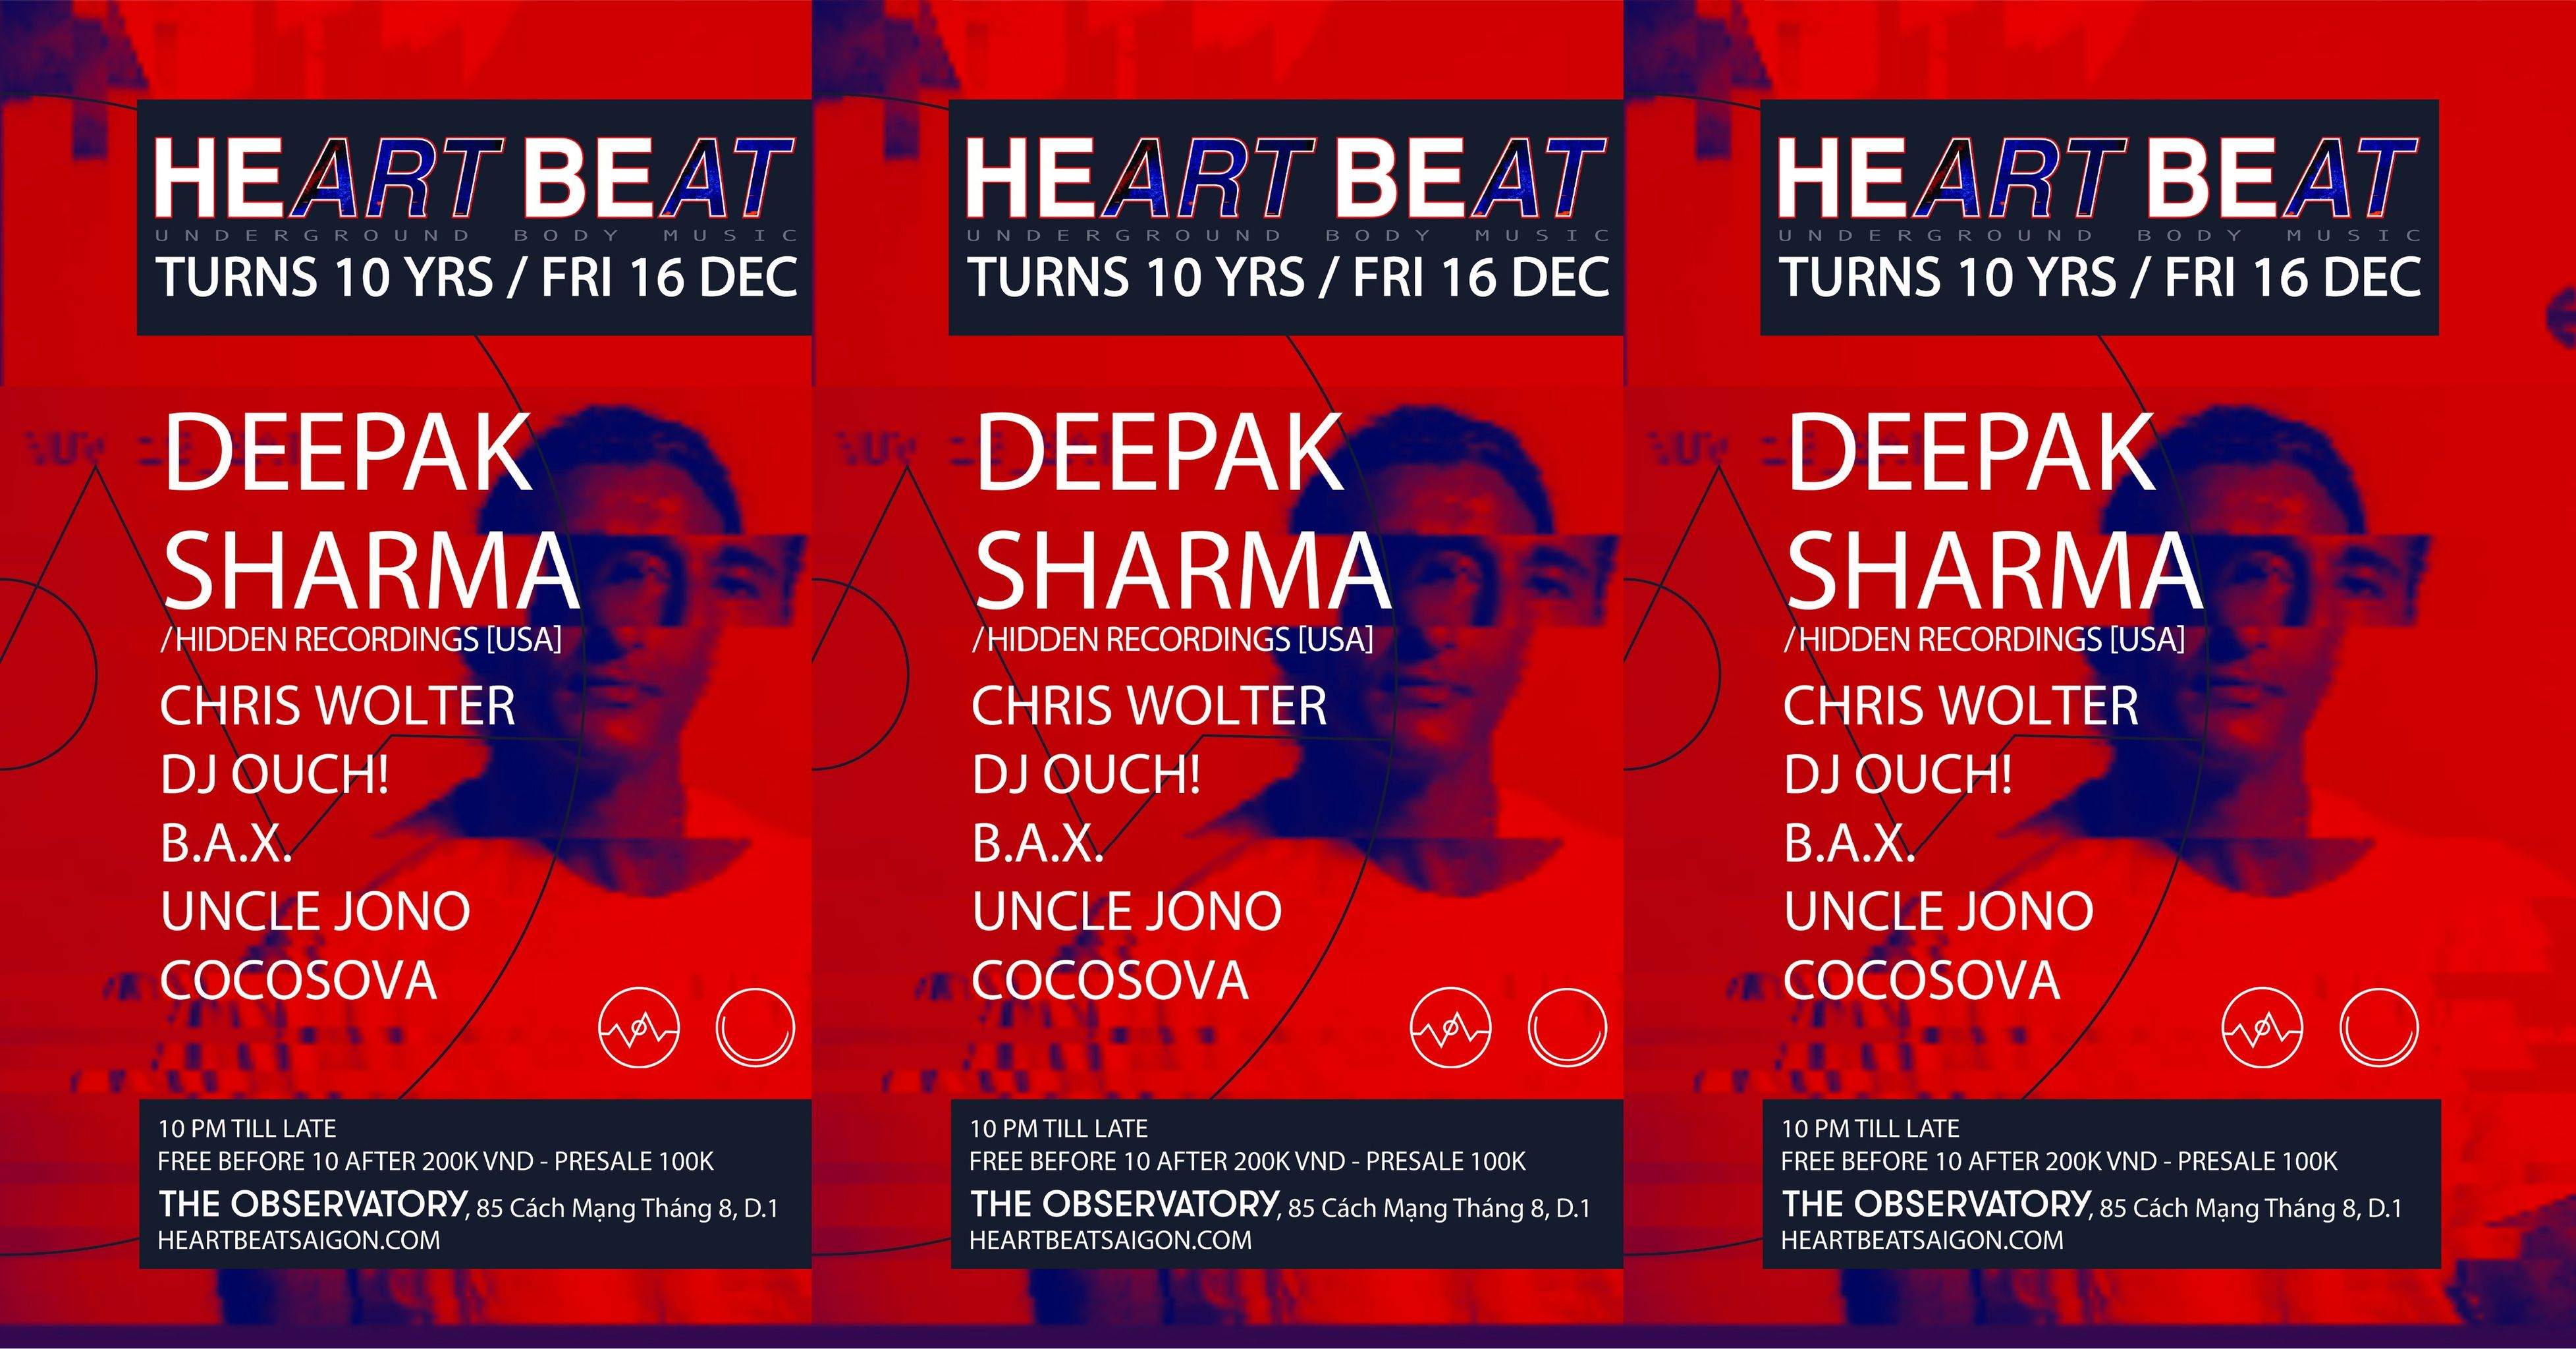 Heart Beat turns 10 with Deepak Sharma - フライヤー表